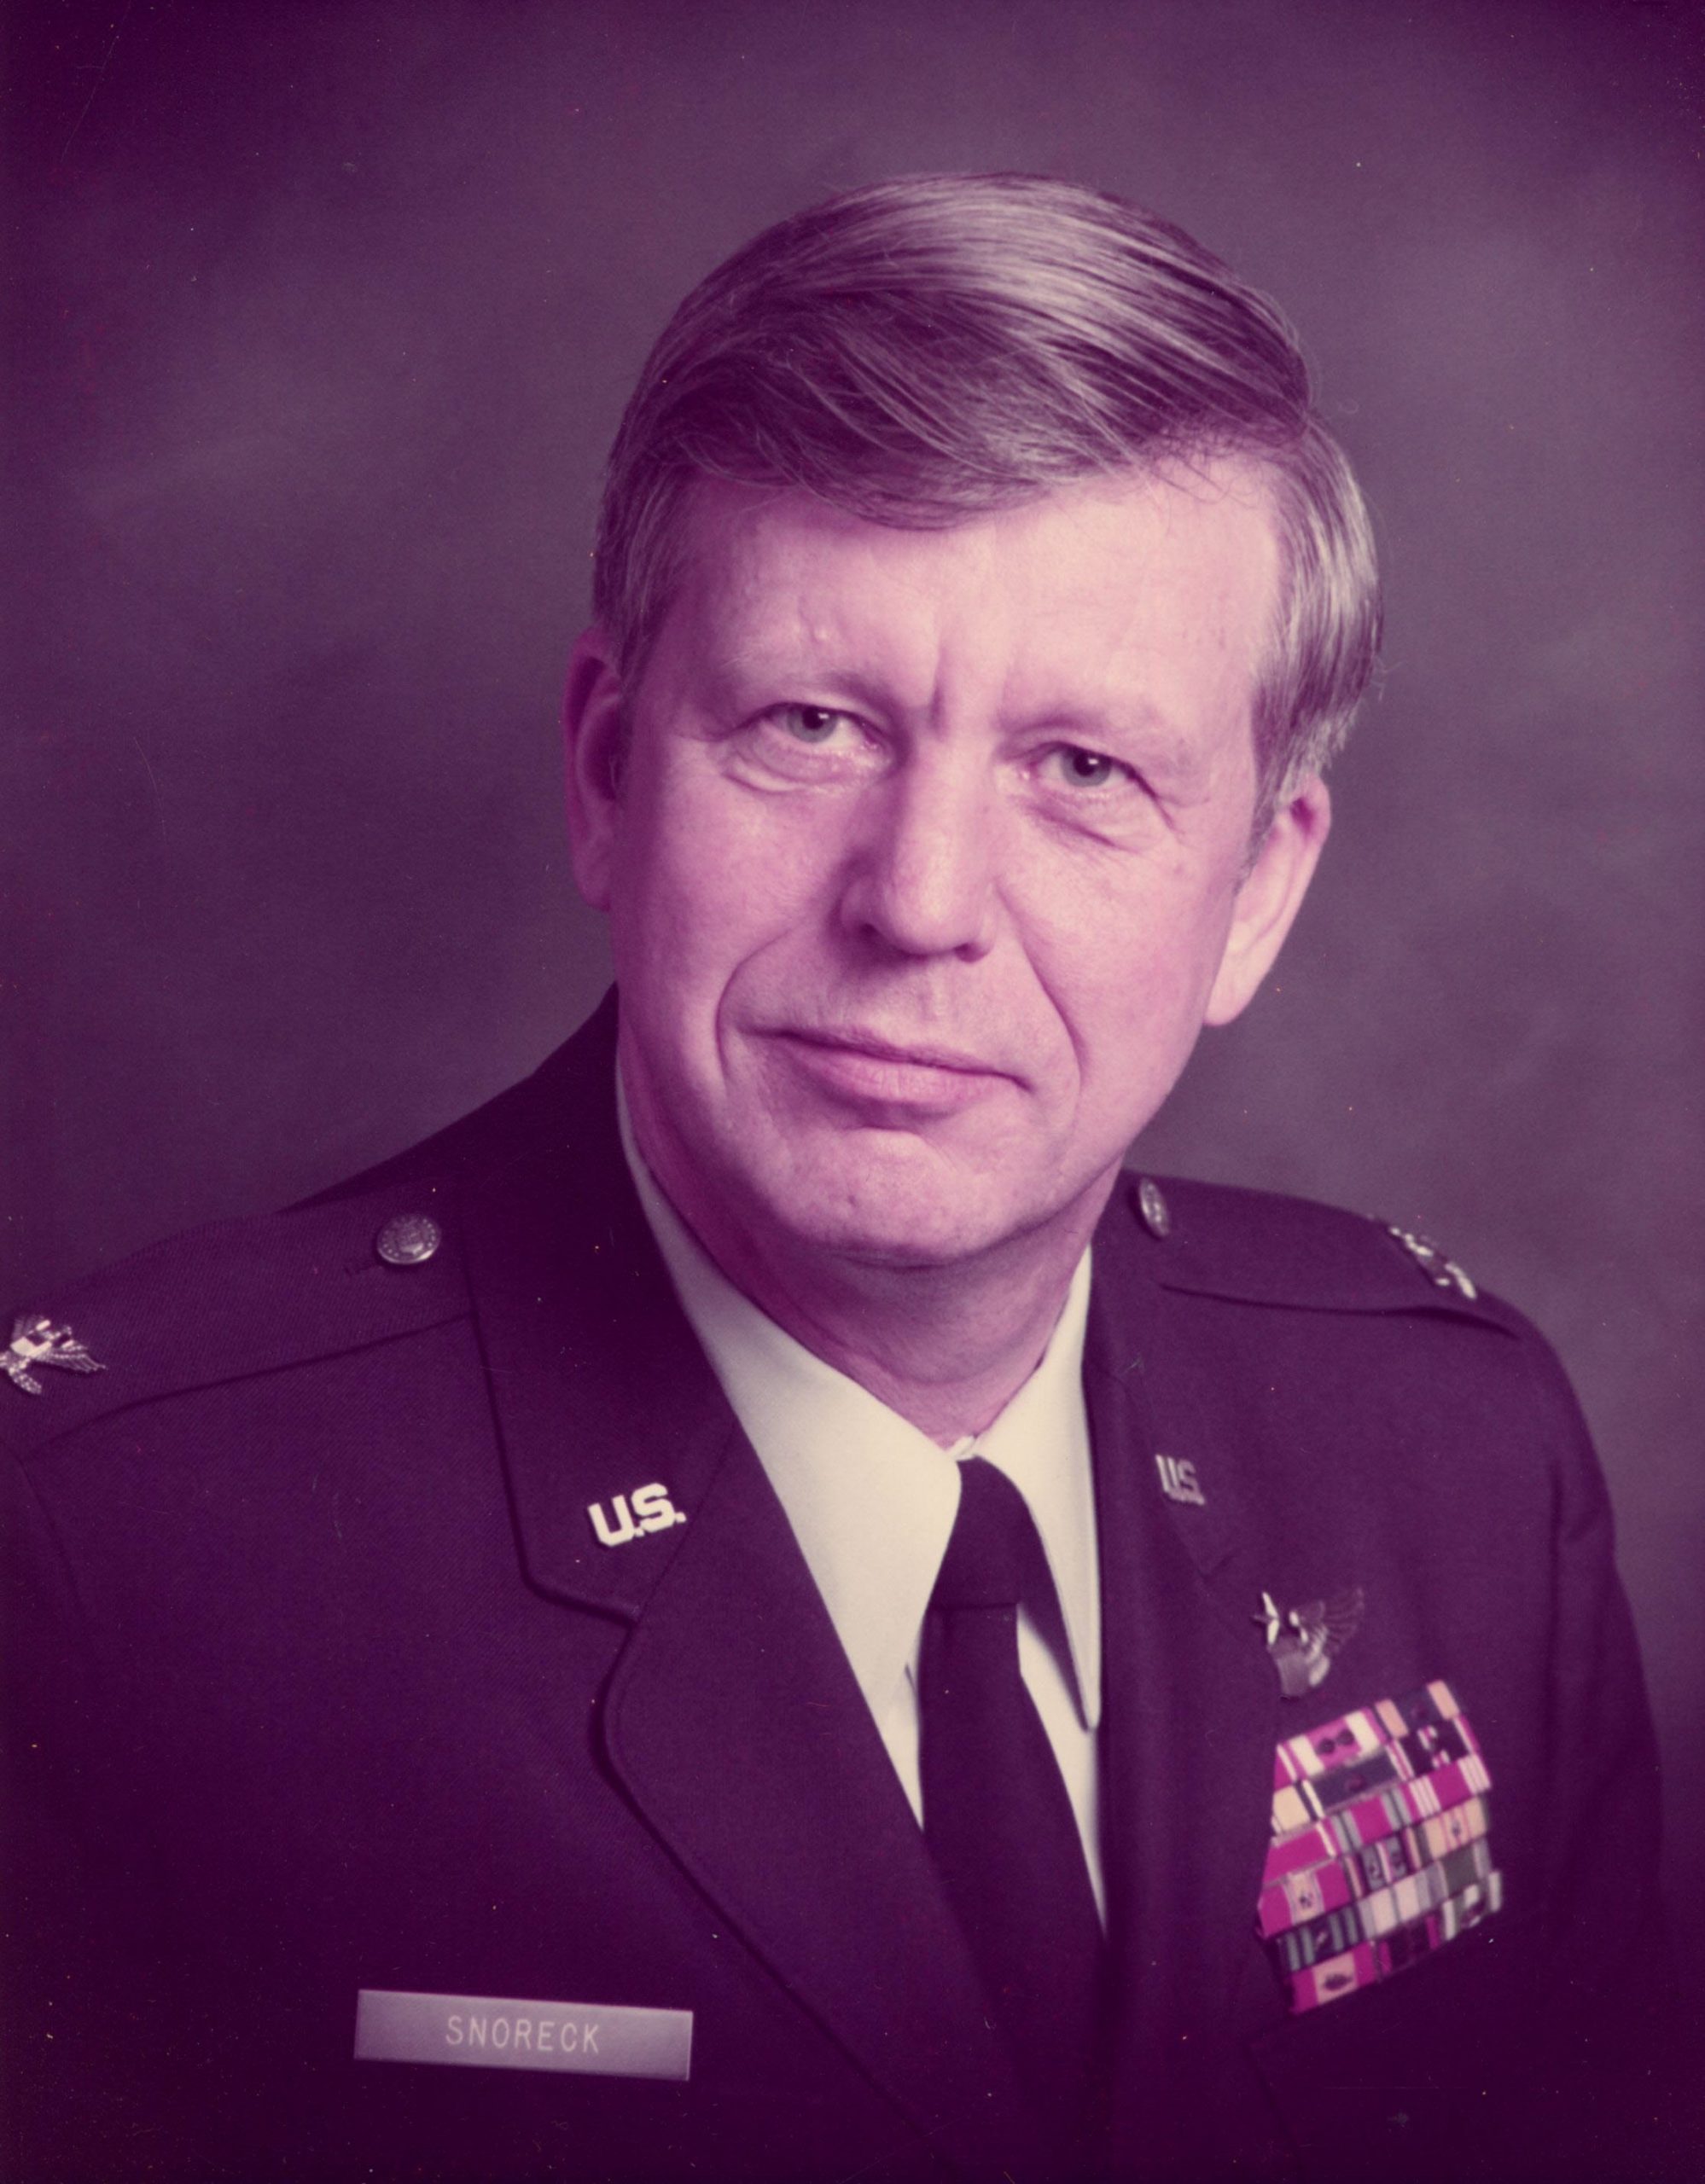 Colonel Harry Philip Snoreck pic